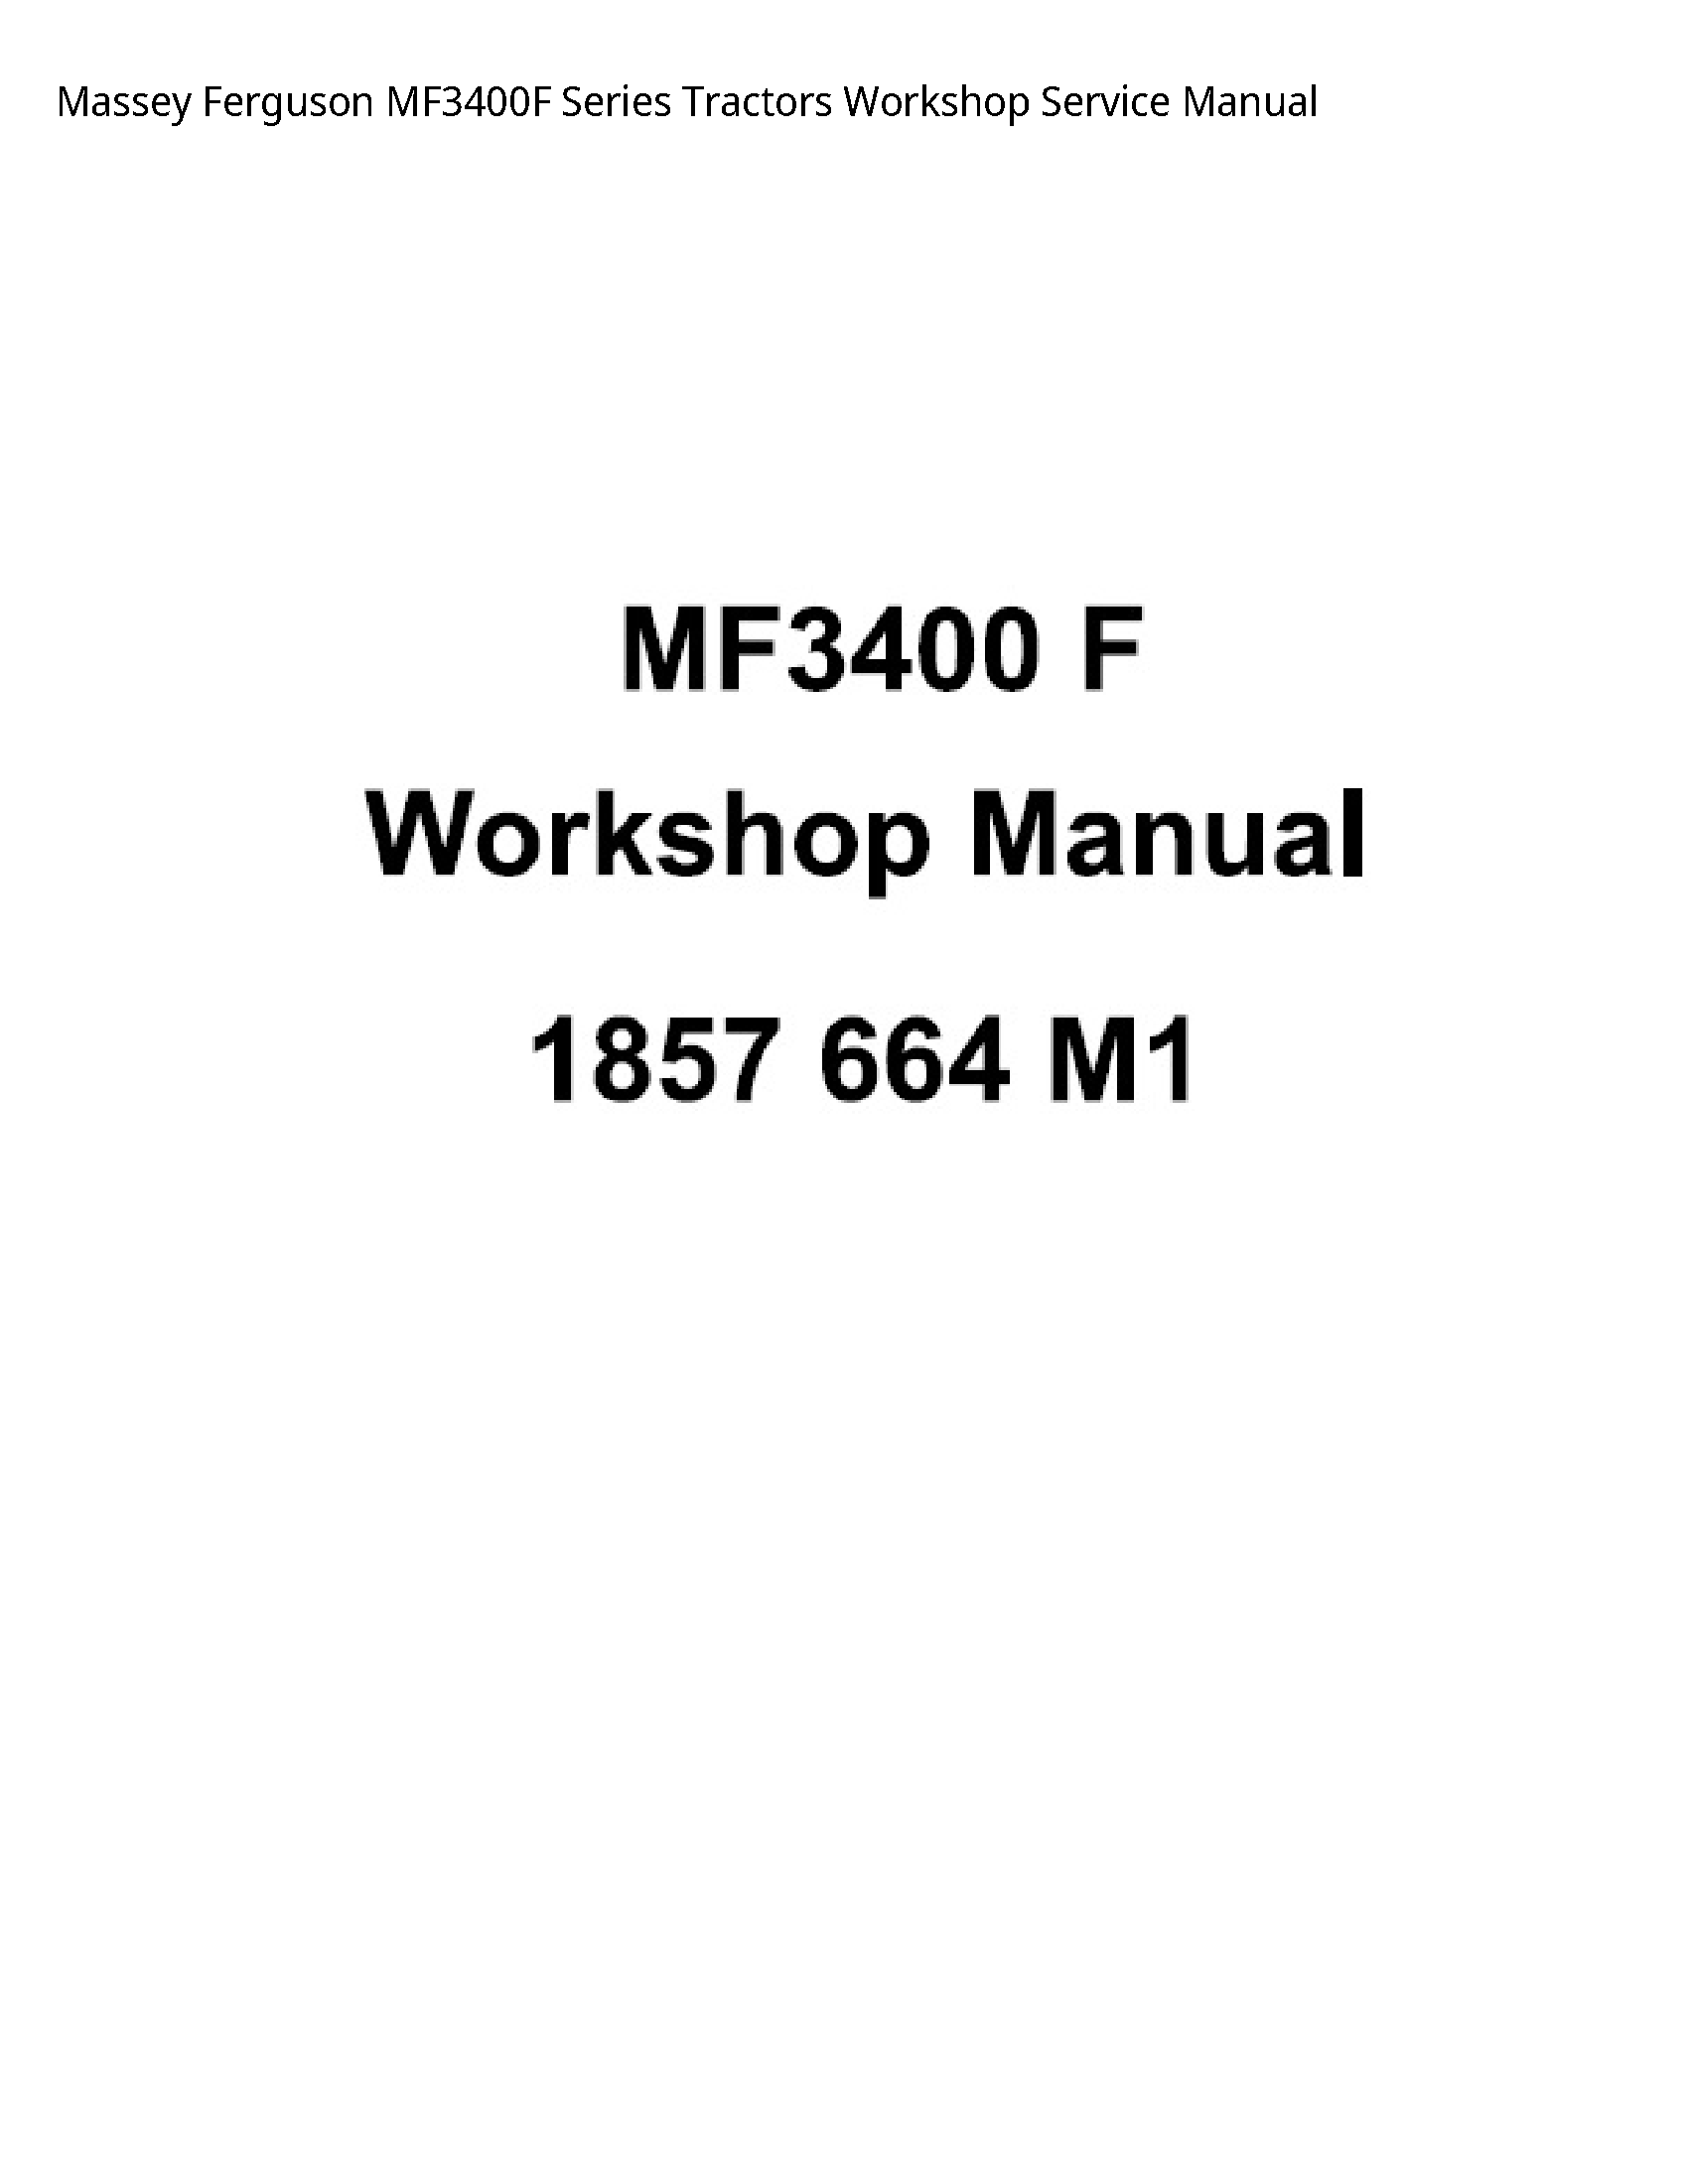 Massey Ferguson MF3400F Series Tractors Service manual